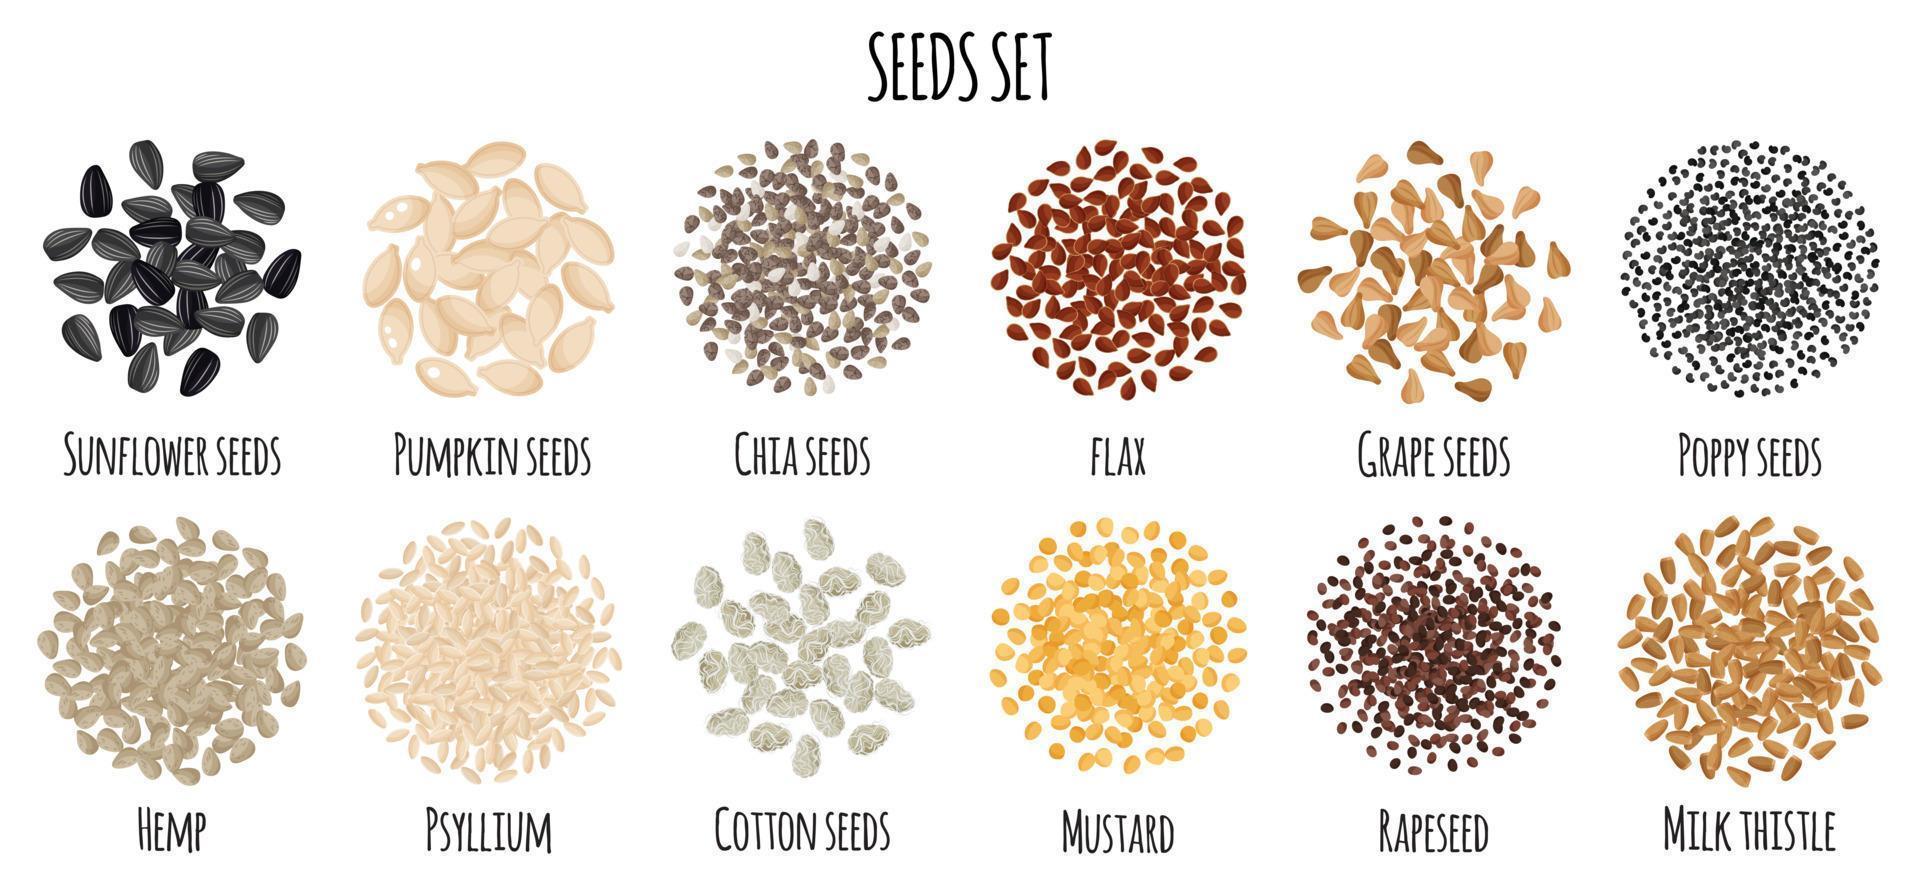 Seeds set with Sunflower, Pumpkin, Chia, Flax, Grape, Poppy, Hemp, Psyllium, Cotton, Mustrad etc. vector